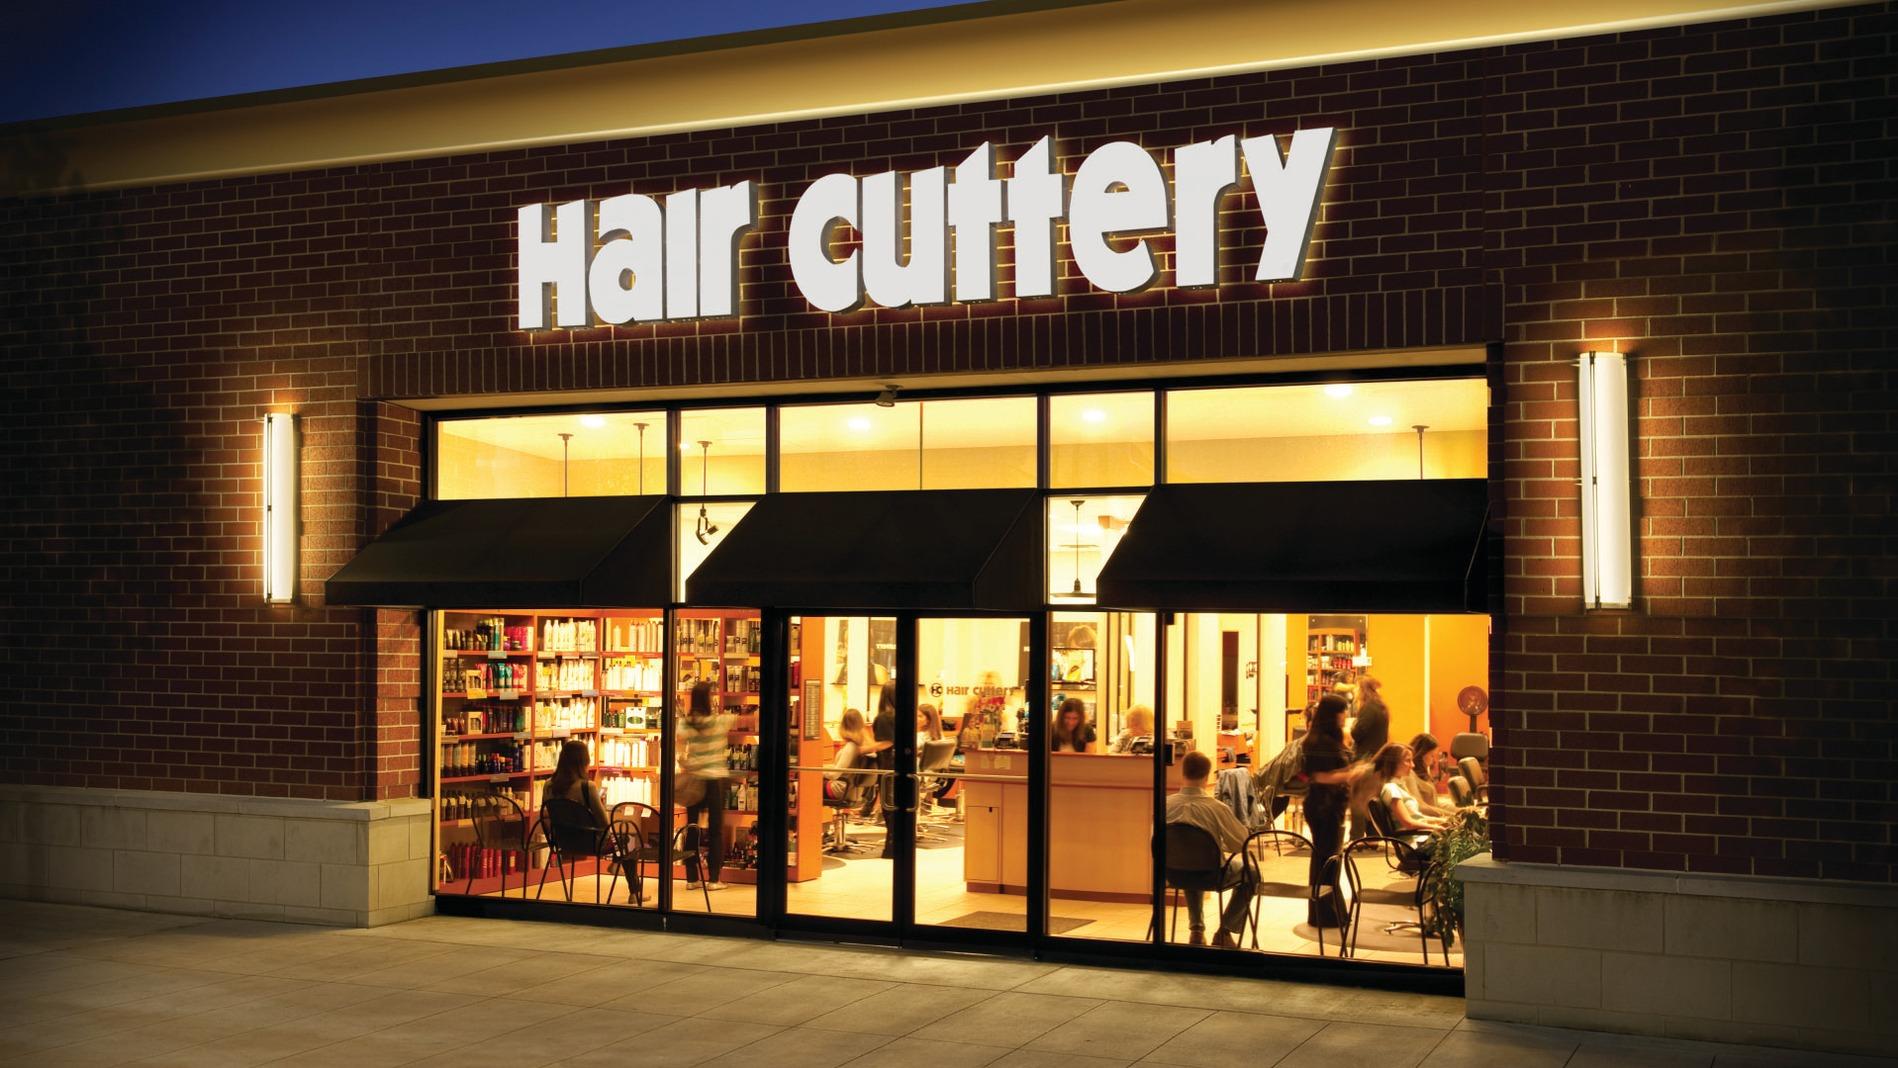 Frizzles of Alexandria | Hair salon in Alexandria, VA